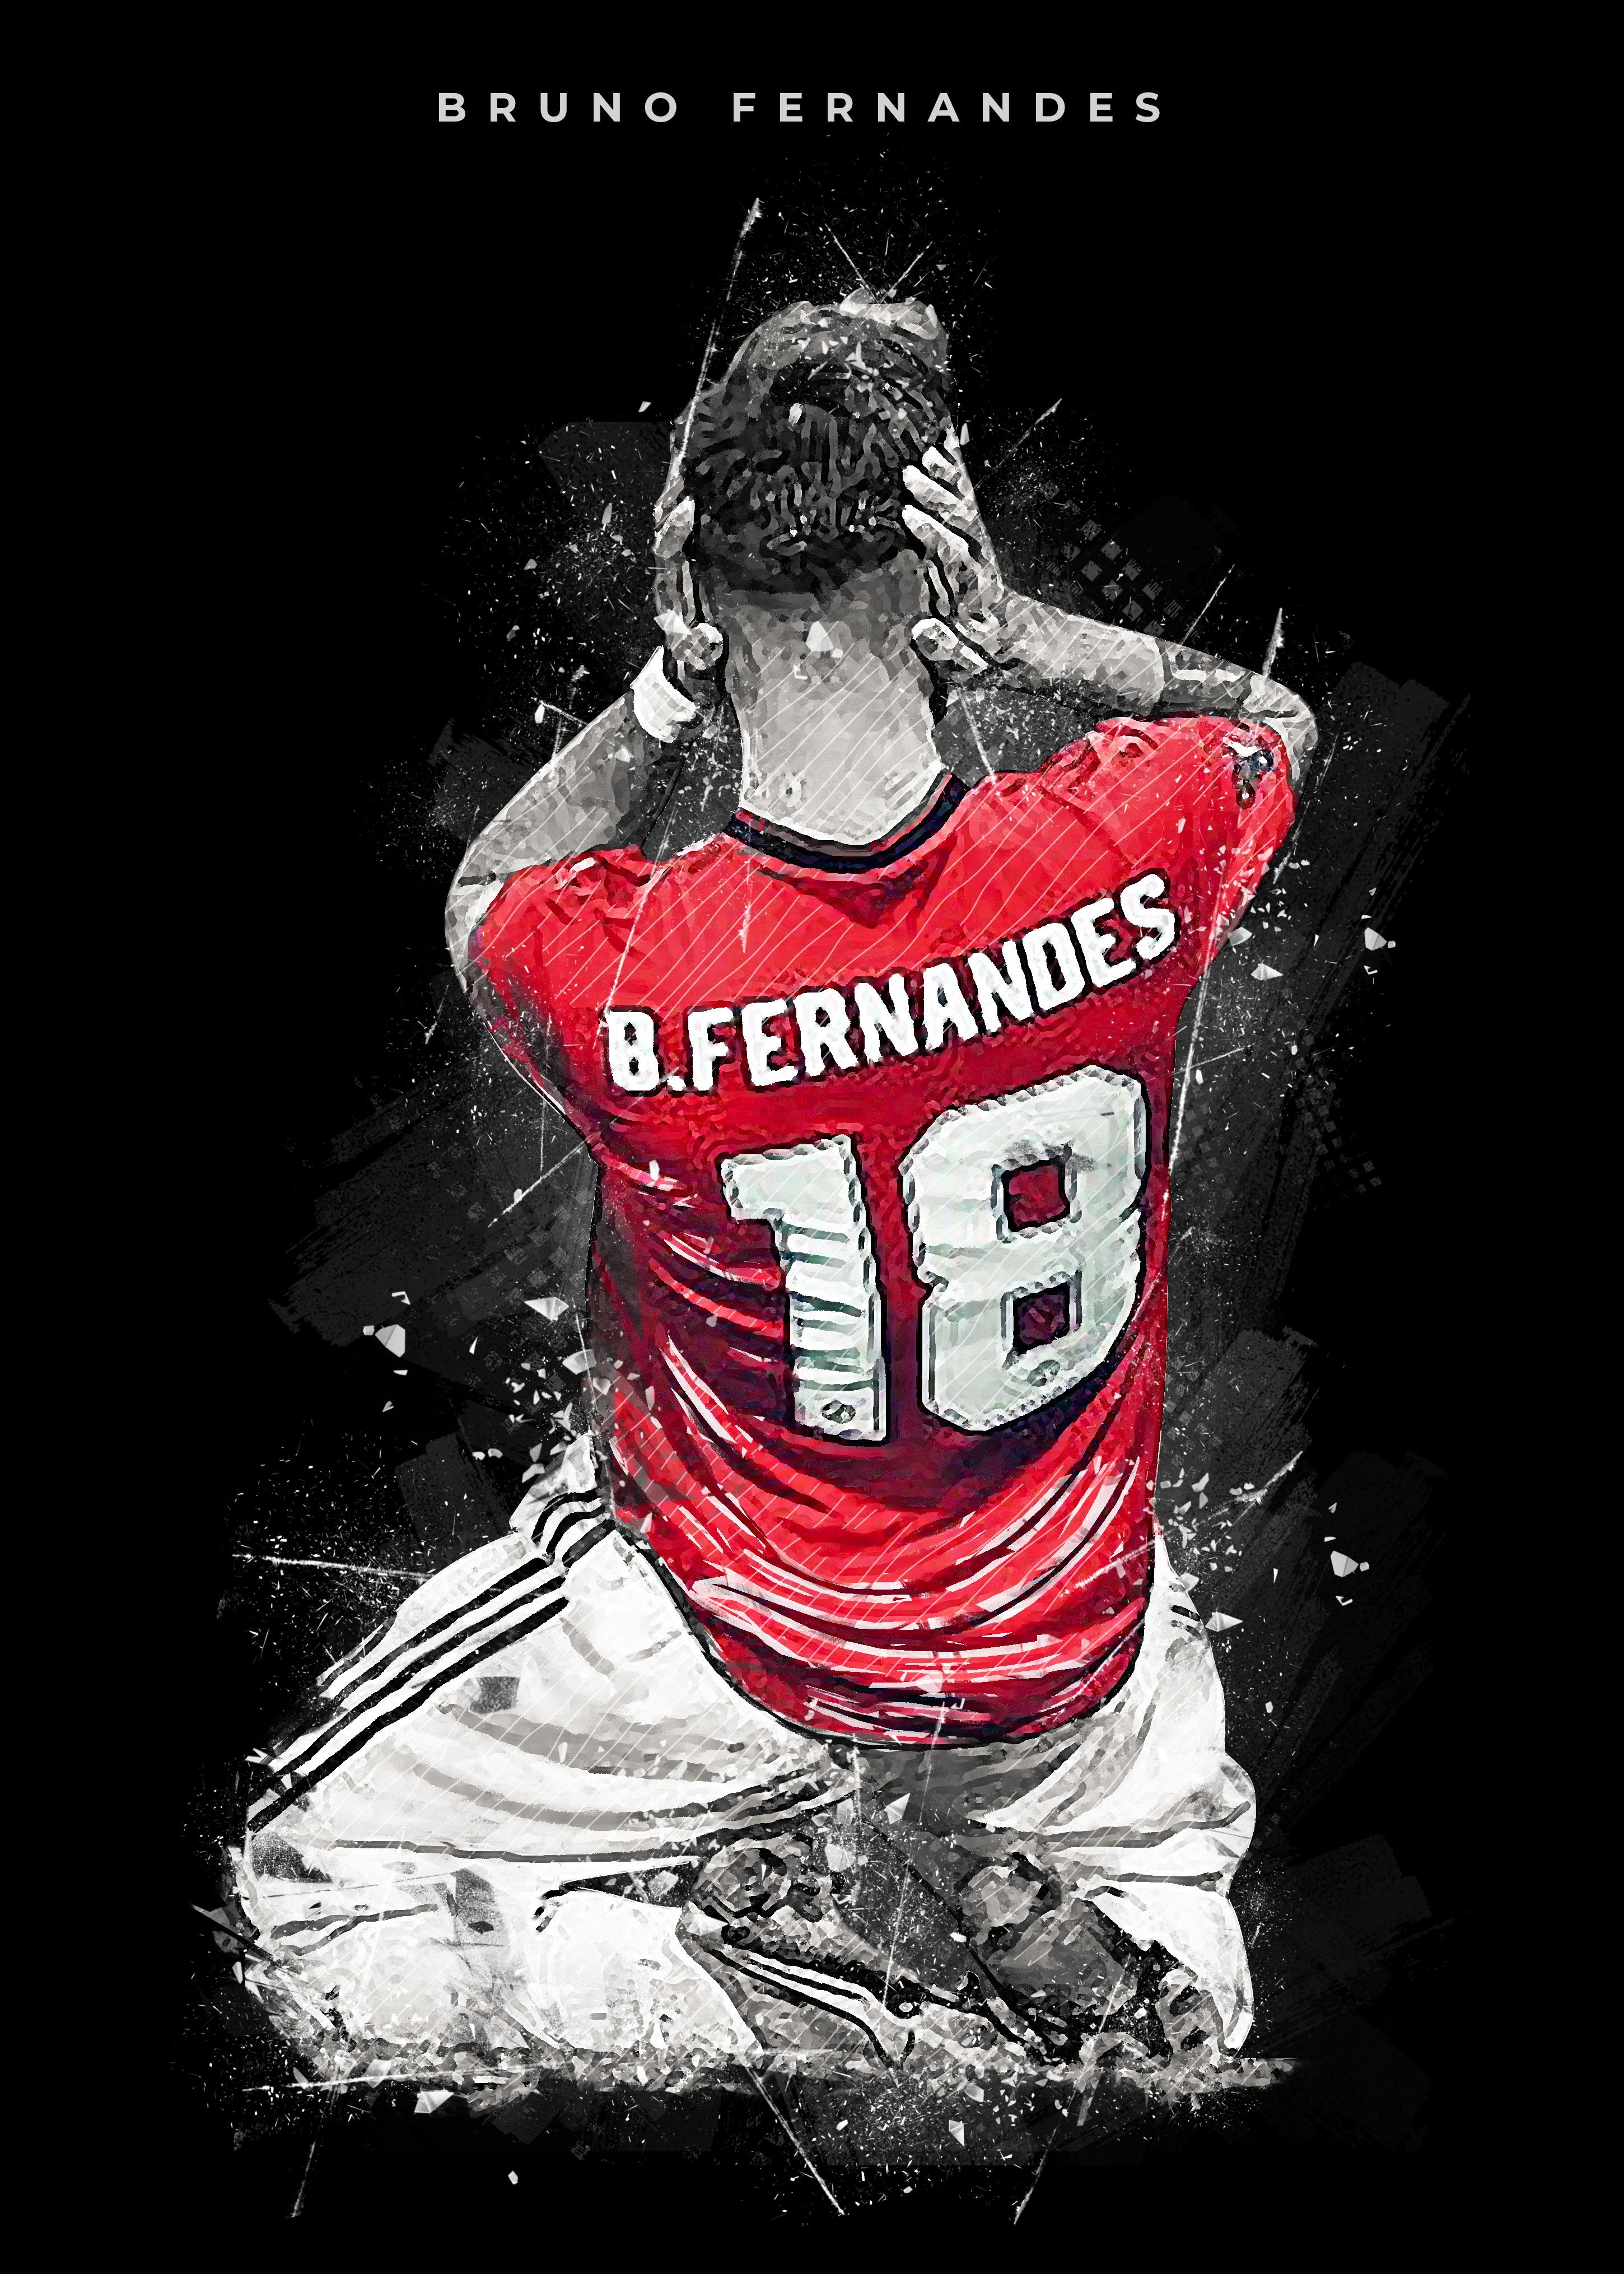 Download wallpapers Bruno Fernandes Manchester United FC Portuguese  footballer midfielder portrait red stone background Premier League  England football for desktop free Pictures for desktop free